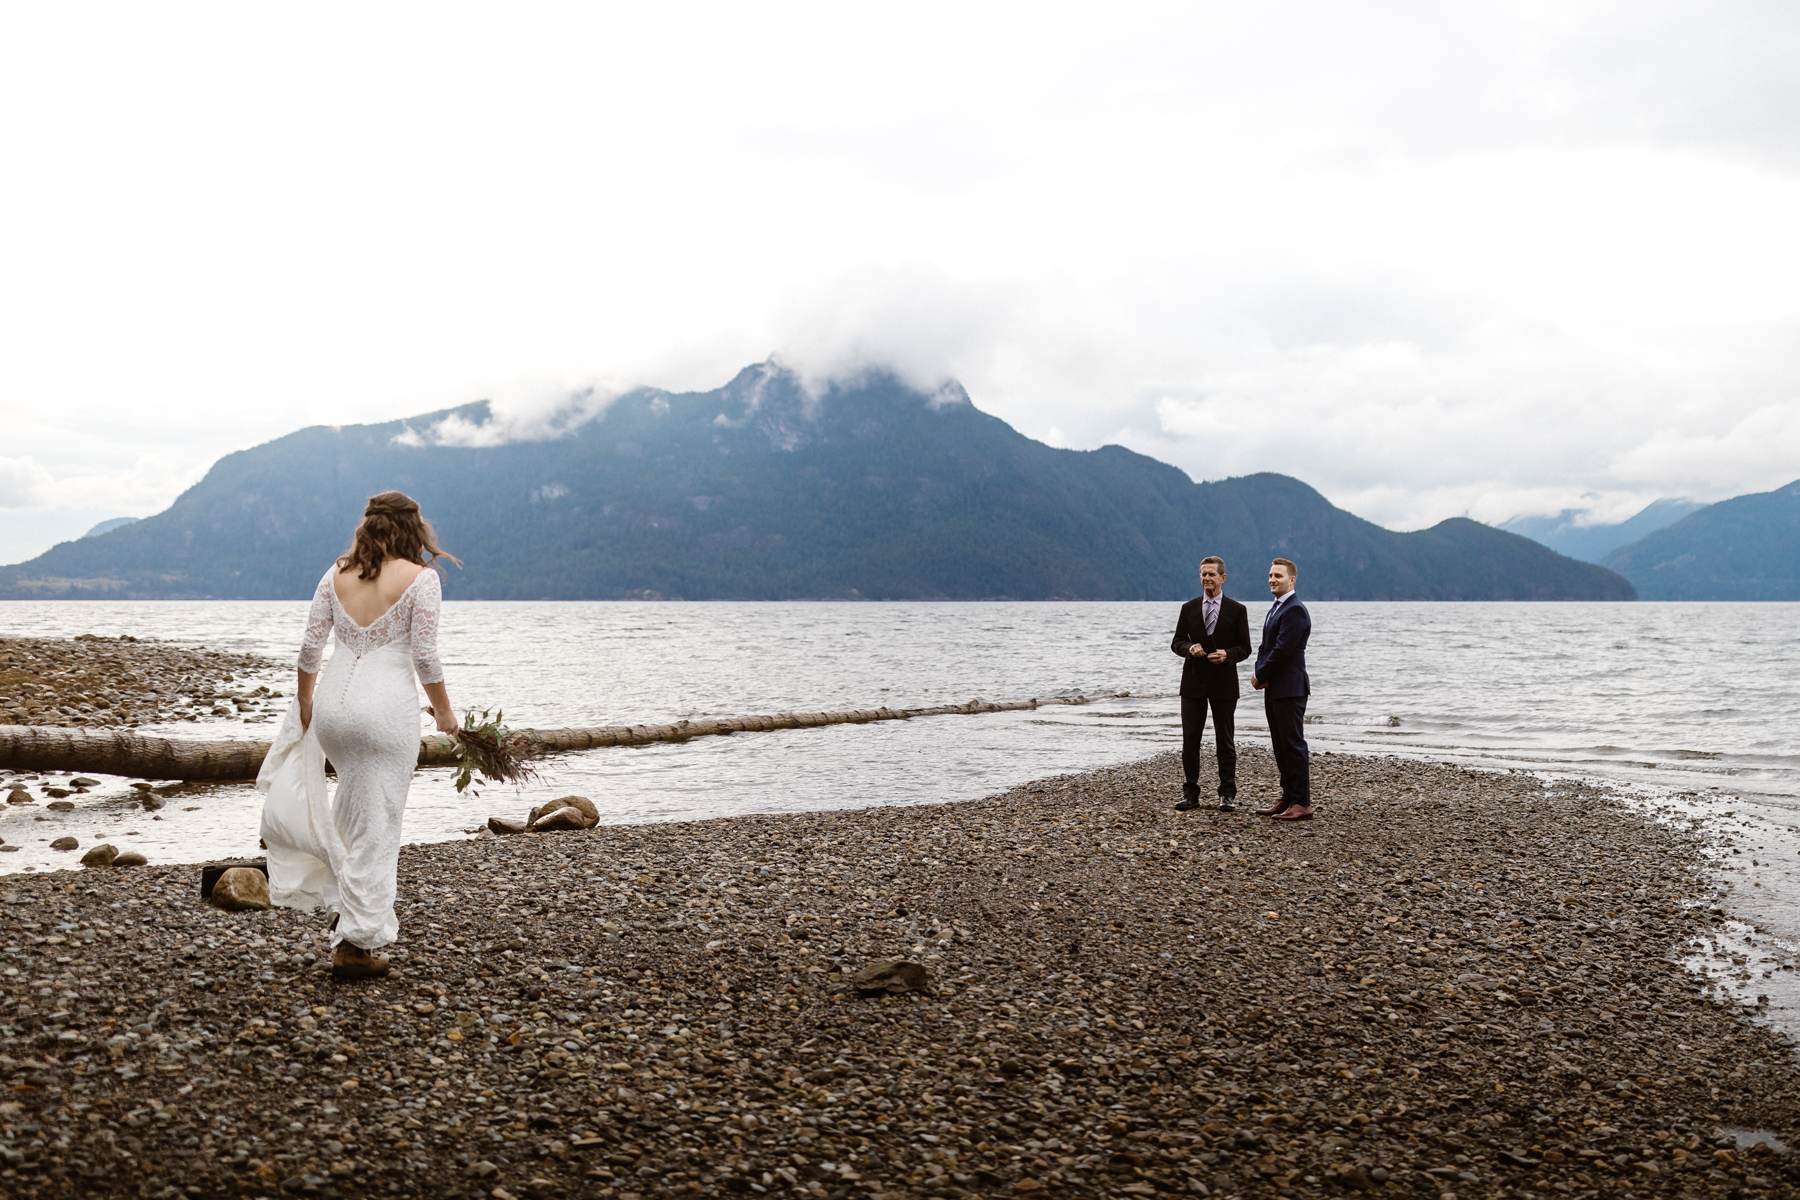 Squamish Wedding Photographers at an Adventurous Elopement - Image 8